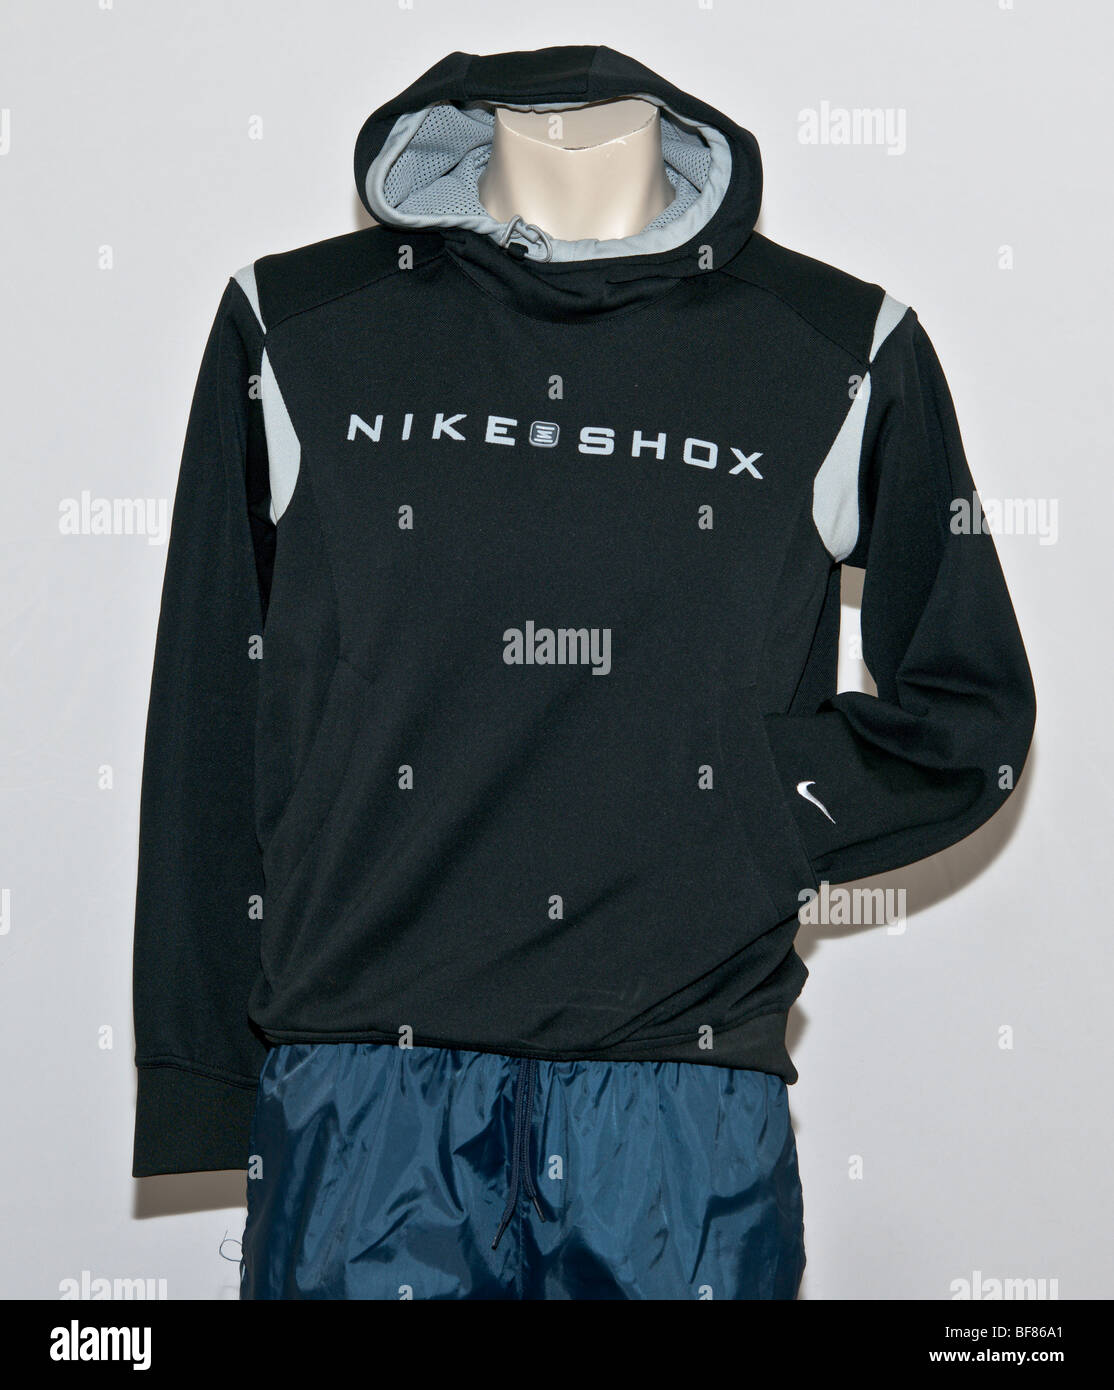 Nike Shox hoody sportswear jacket. Menswear overhead sports branded clothing item. Stock Photo